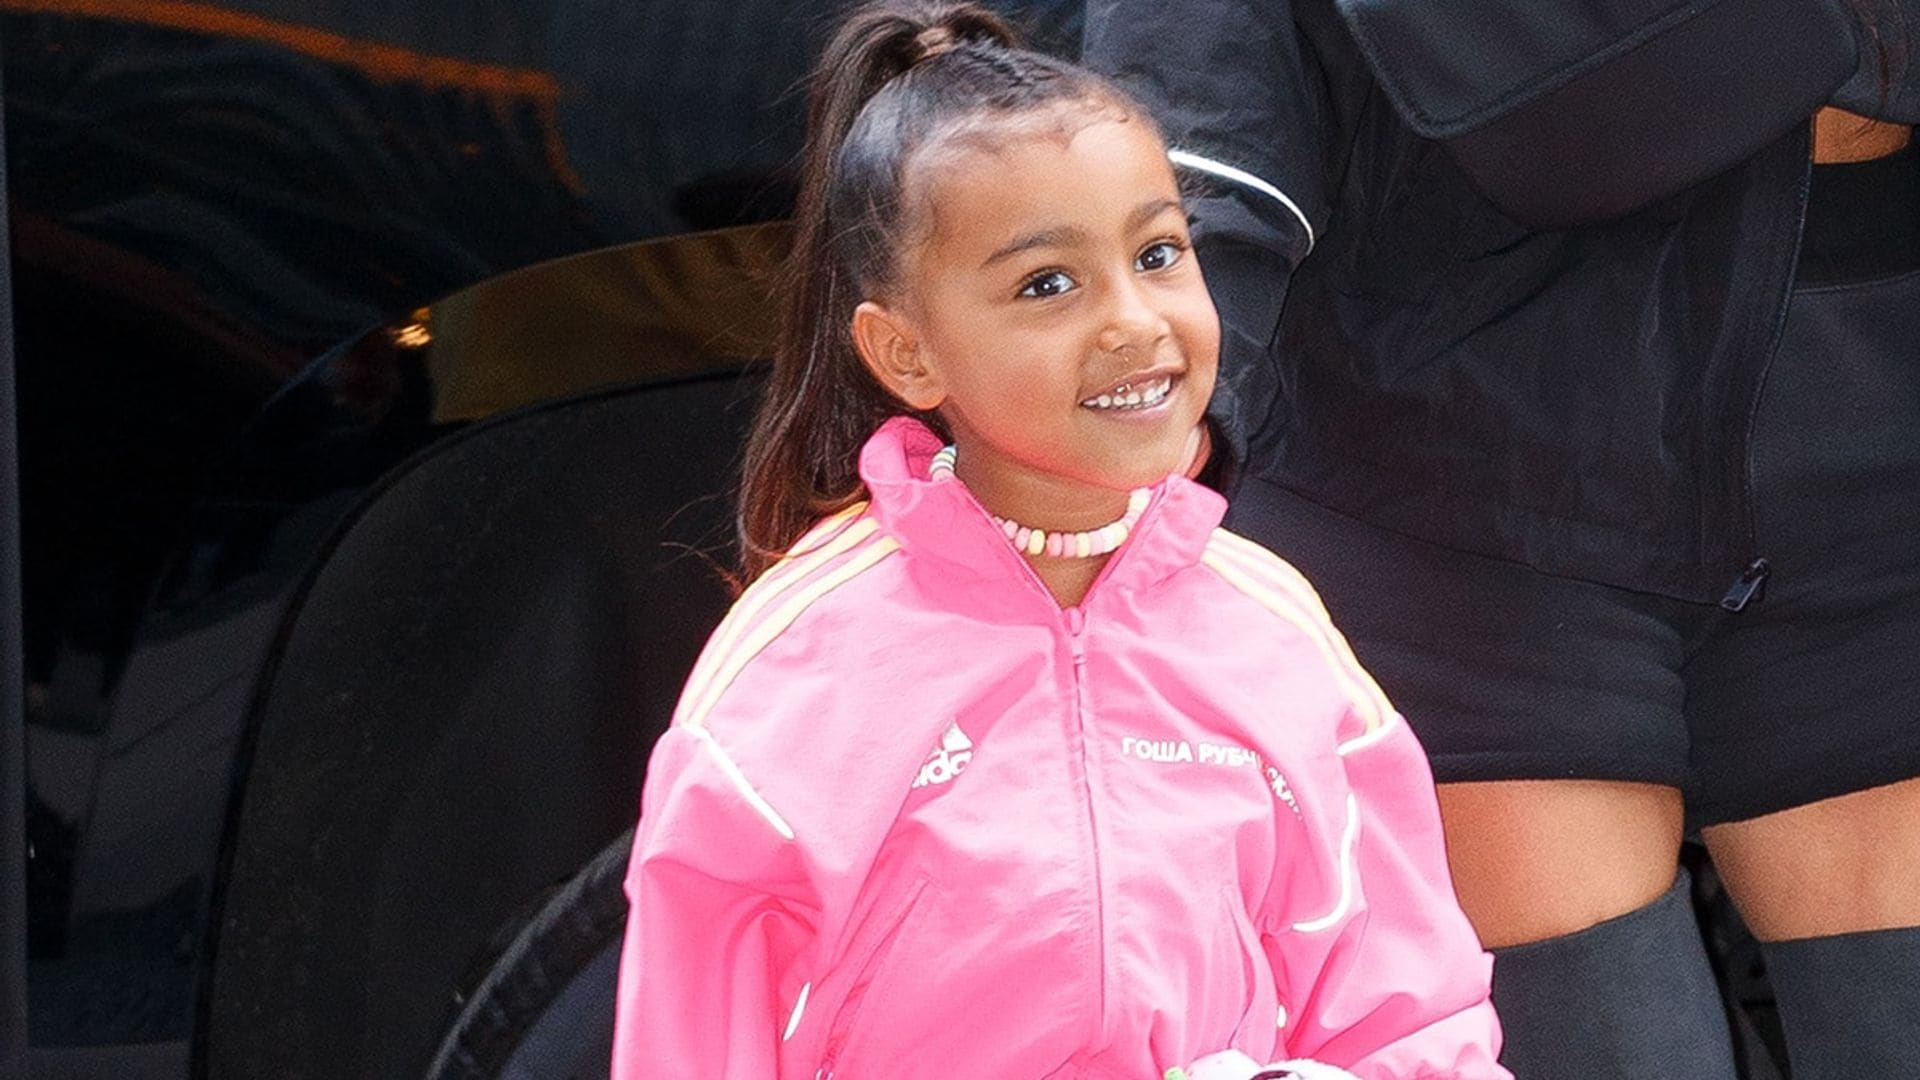 Does Kim Kardashian's five-year-old daughter North have a 'boyfriend'?